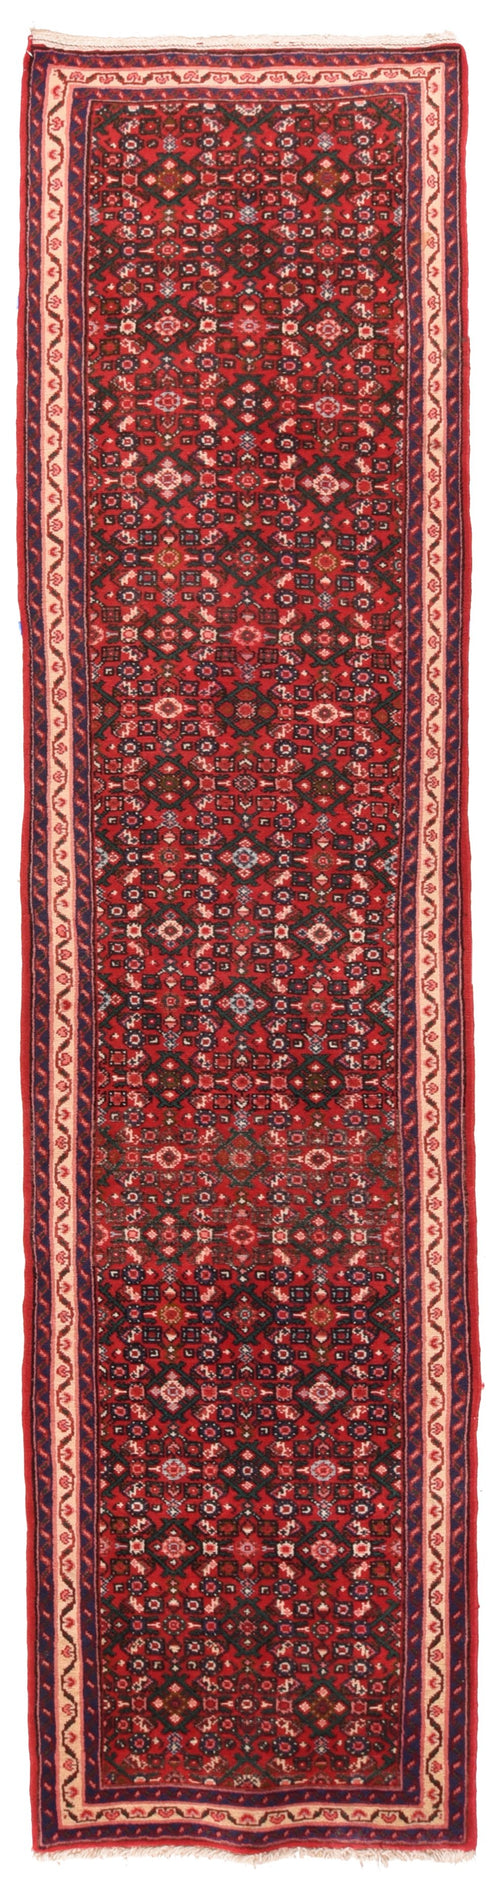 Semi Antique Red Persian Hamedan Area Rug